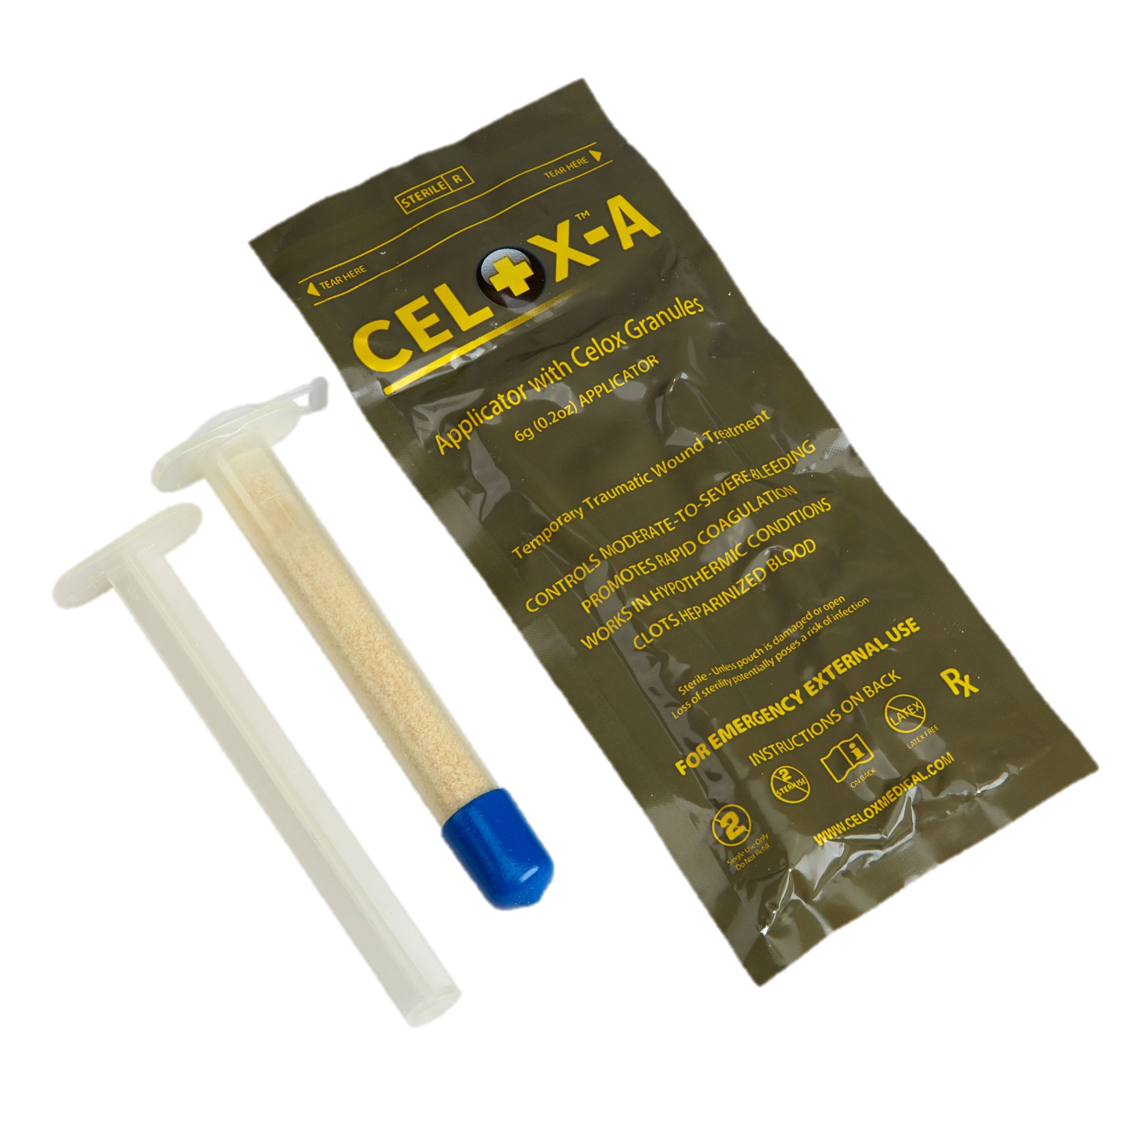 CELOX-A Applicator with CELOX Granules (6g)